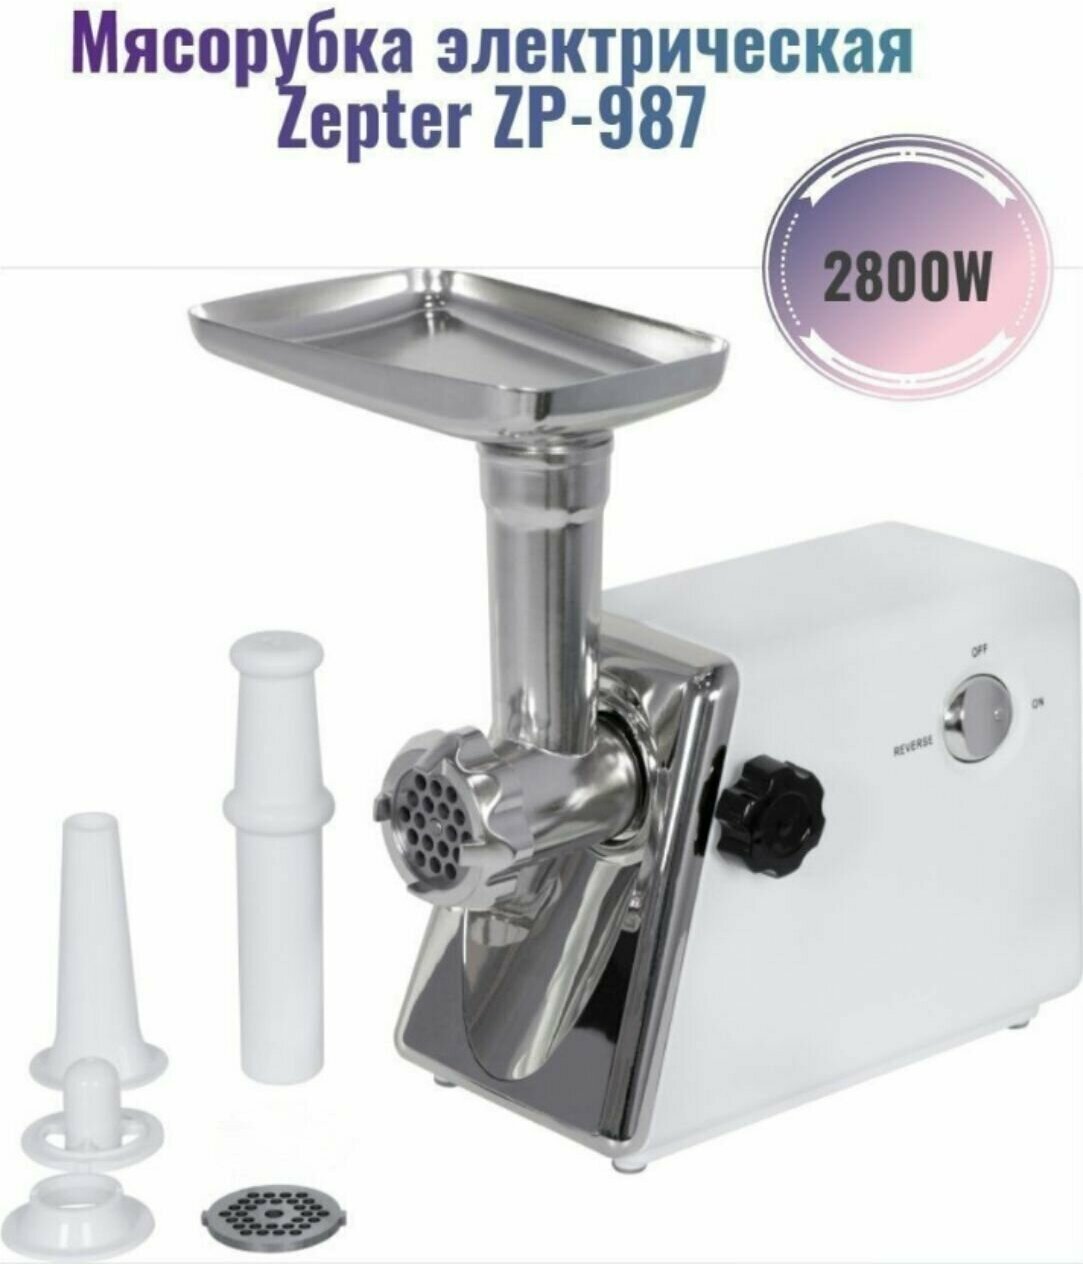 Электрическая мясорубка Zepter ZP-987, функция реверс, 1кг/мин, 2800 Вт